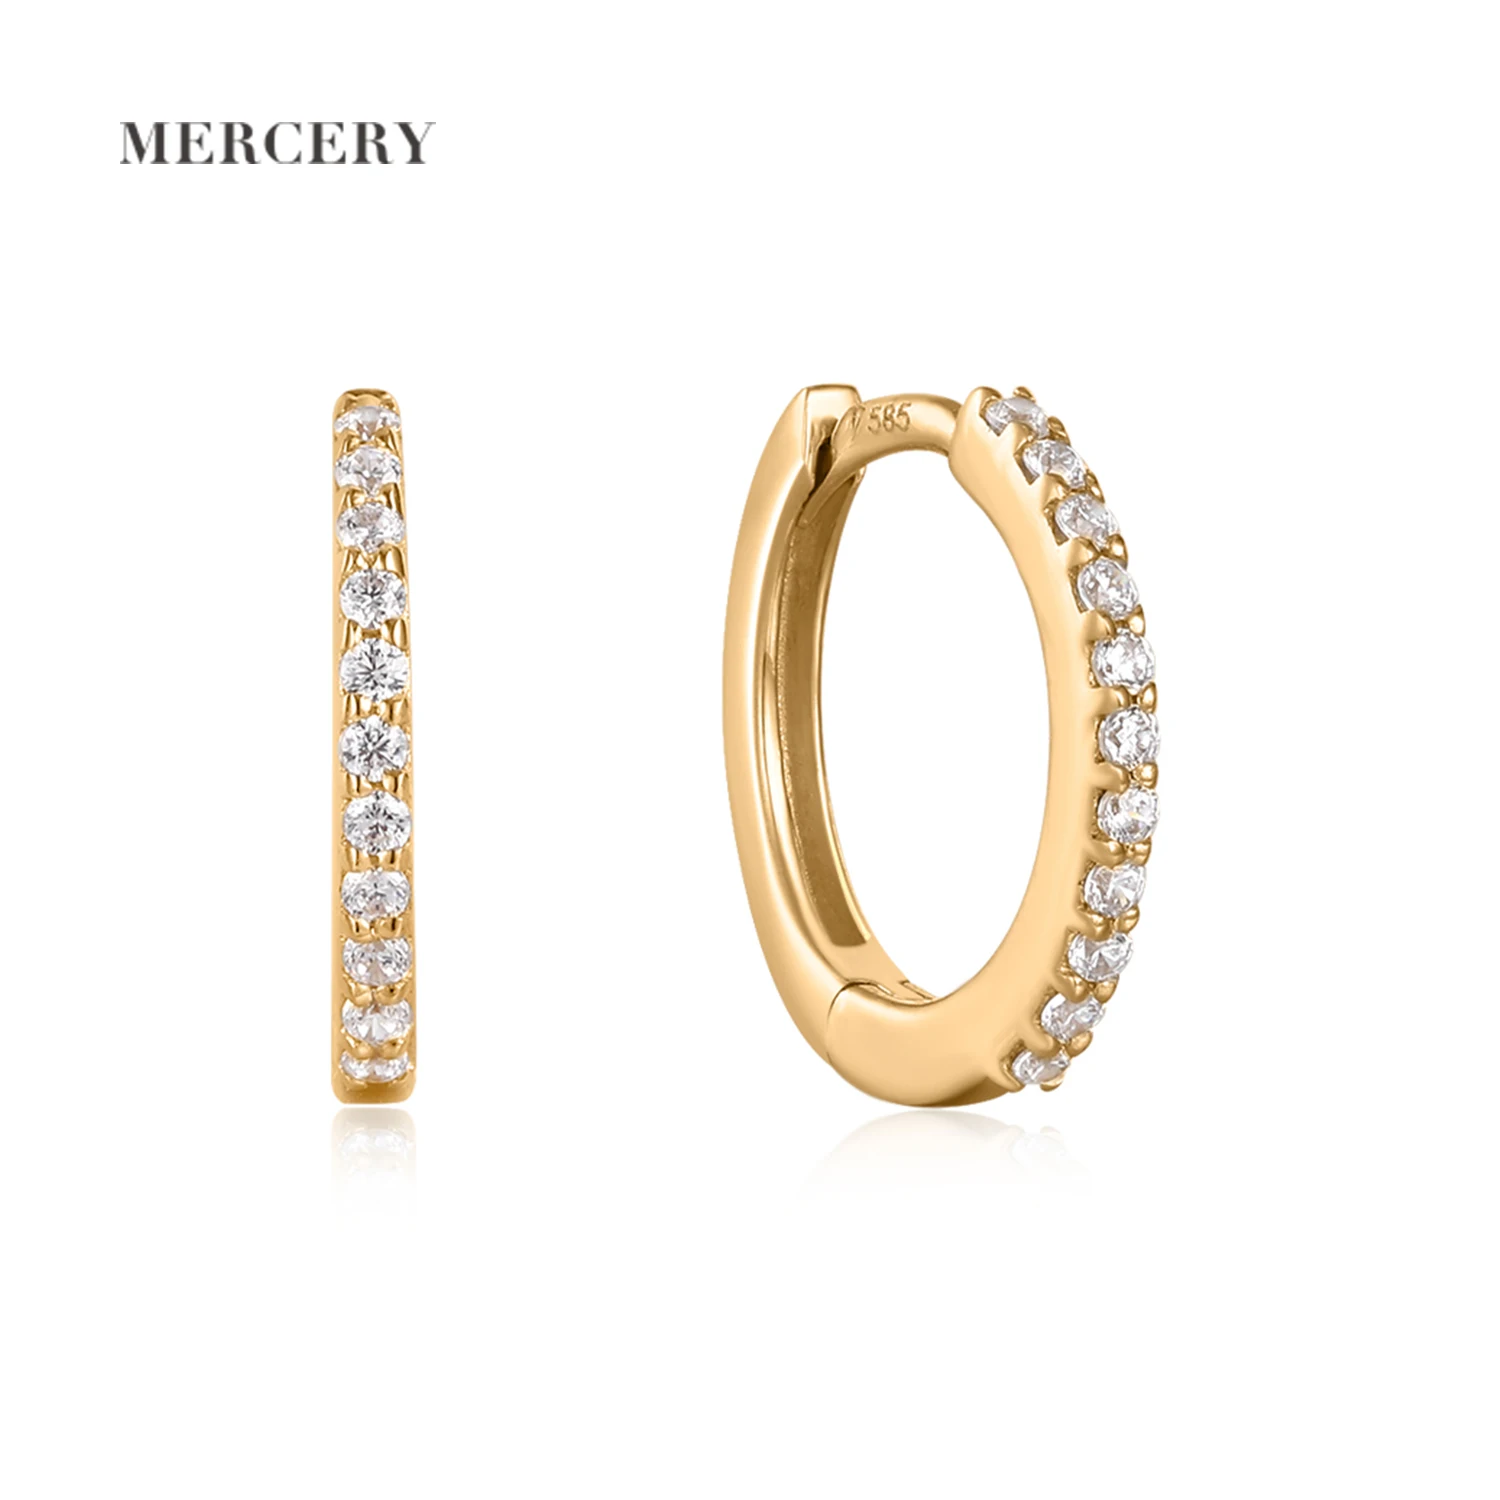 Designer Earrings Girls Trendy 22K Gold Plated Drop Push Back Fashion  Jewelry | eBay